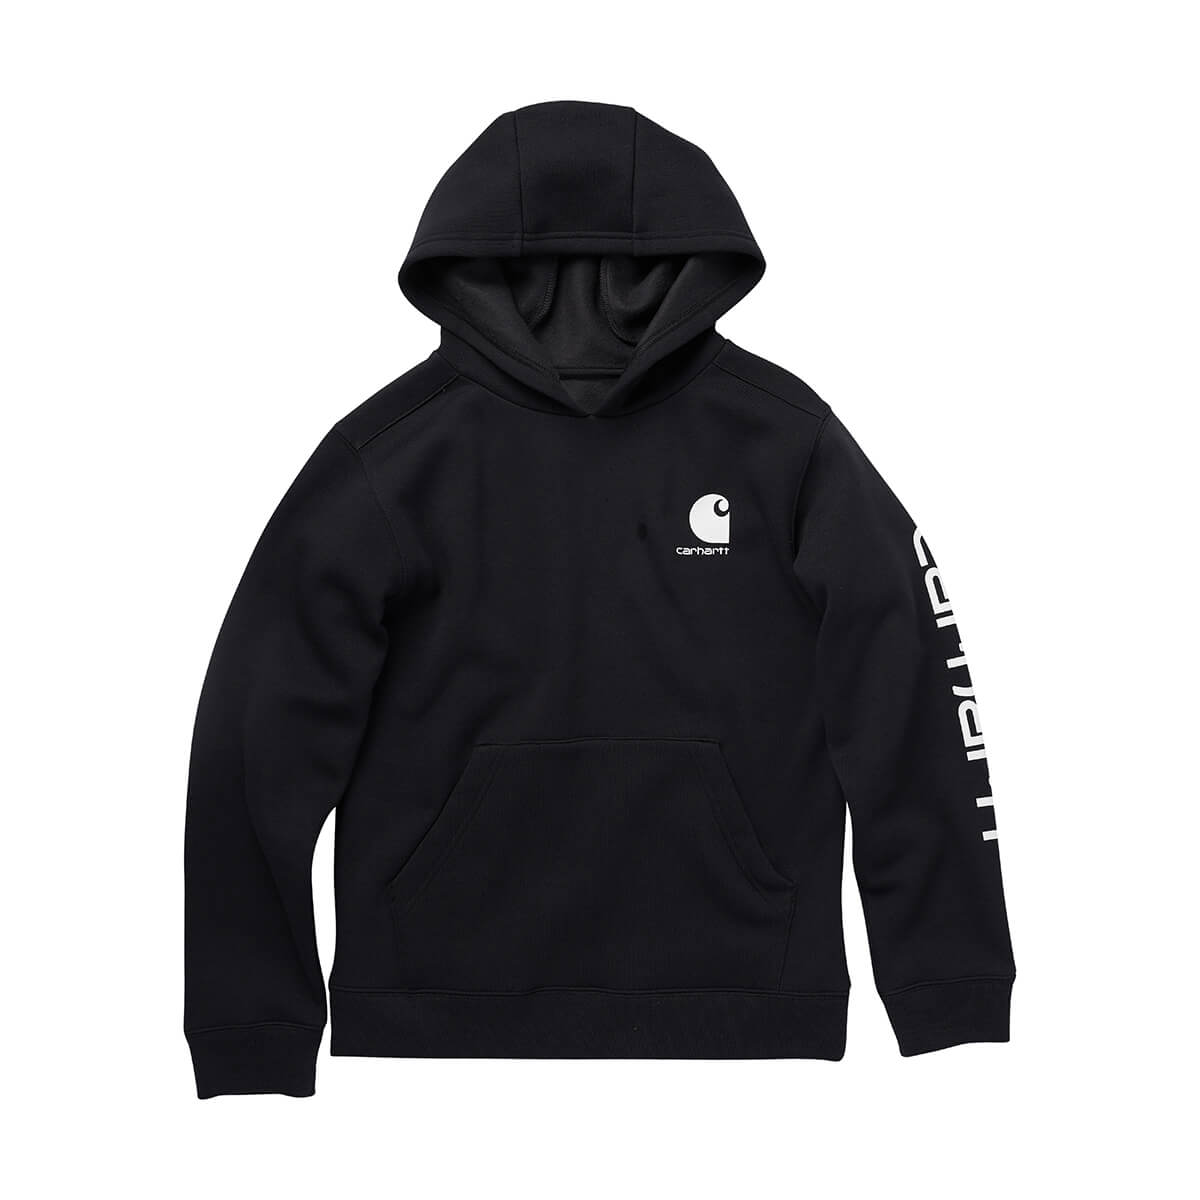 Carhartt Boys' Long-Sleeve Hooded Graphic Sweatshirt - Black